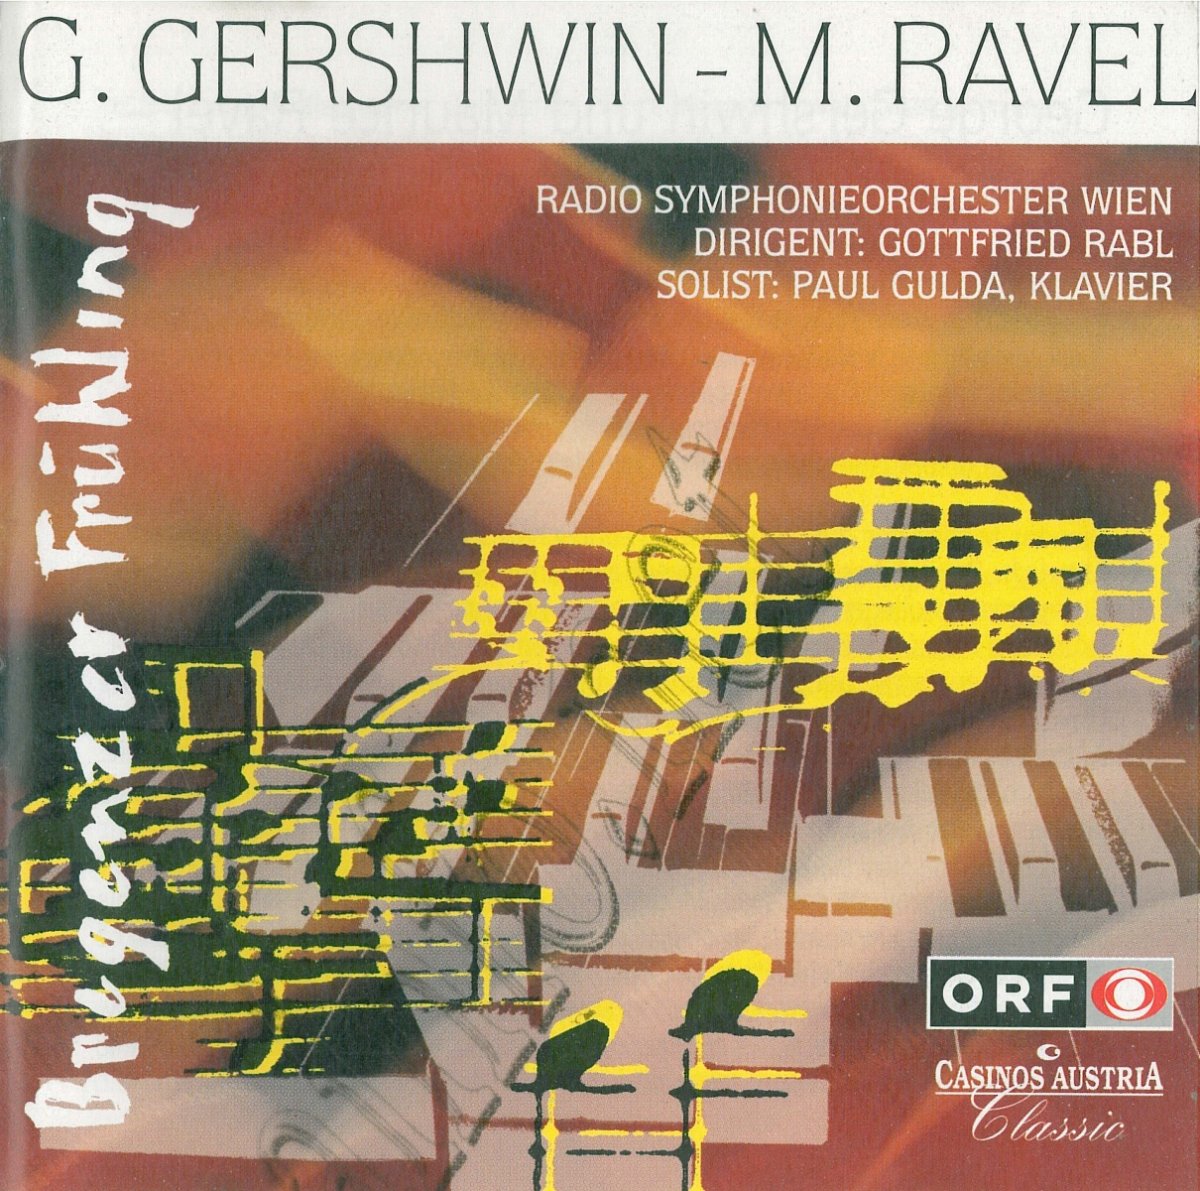 George Gershwin - Maurice Ravel - click here